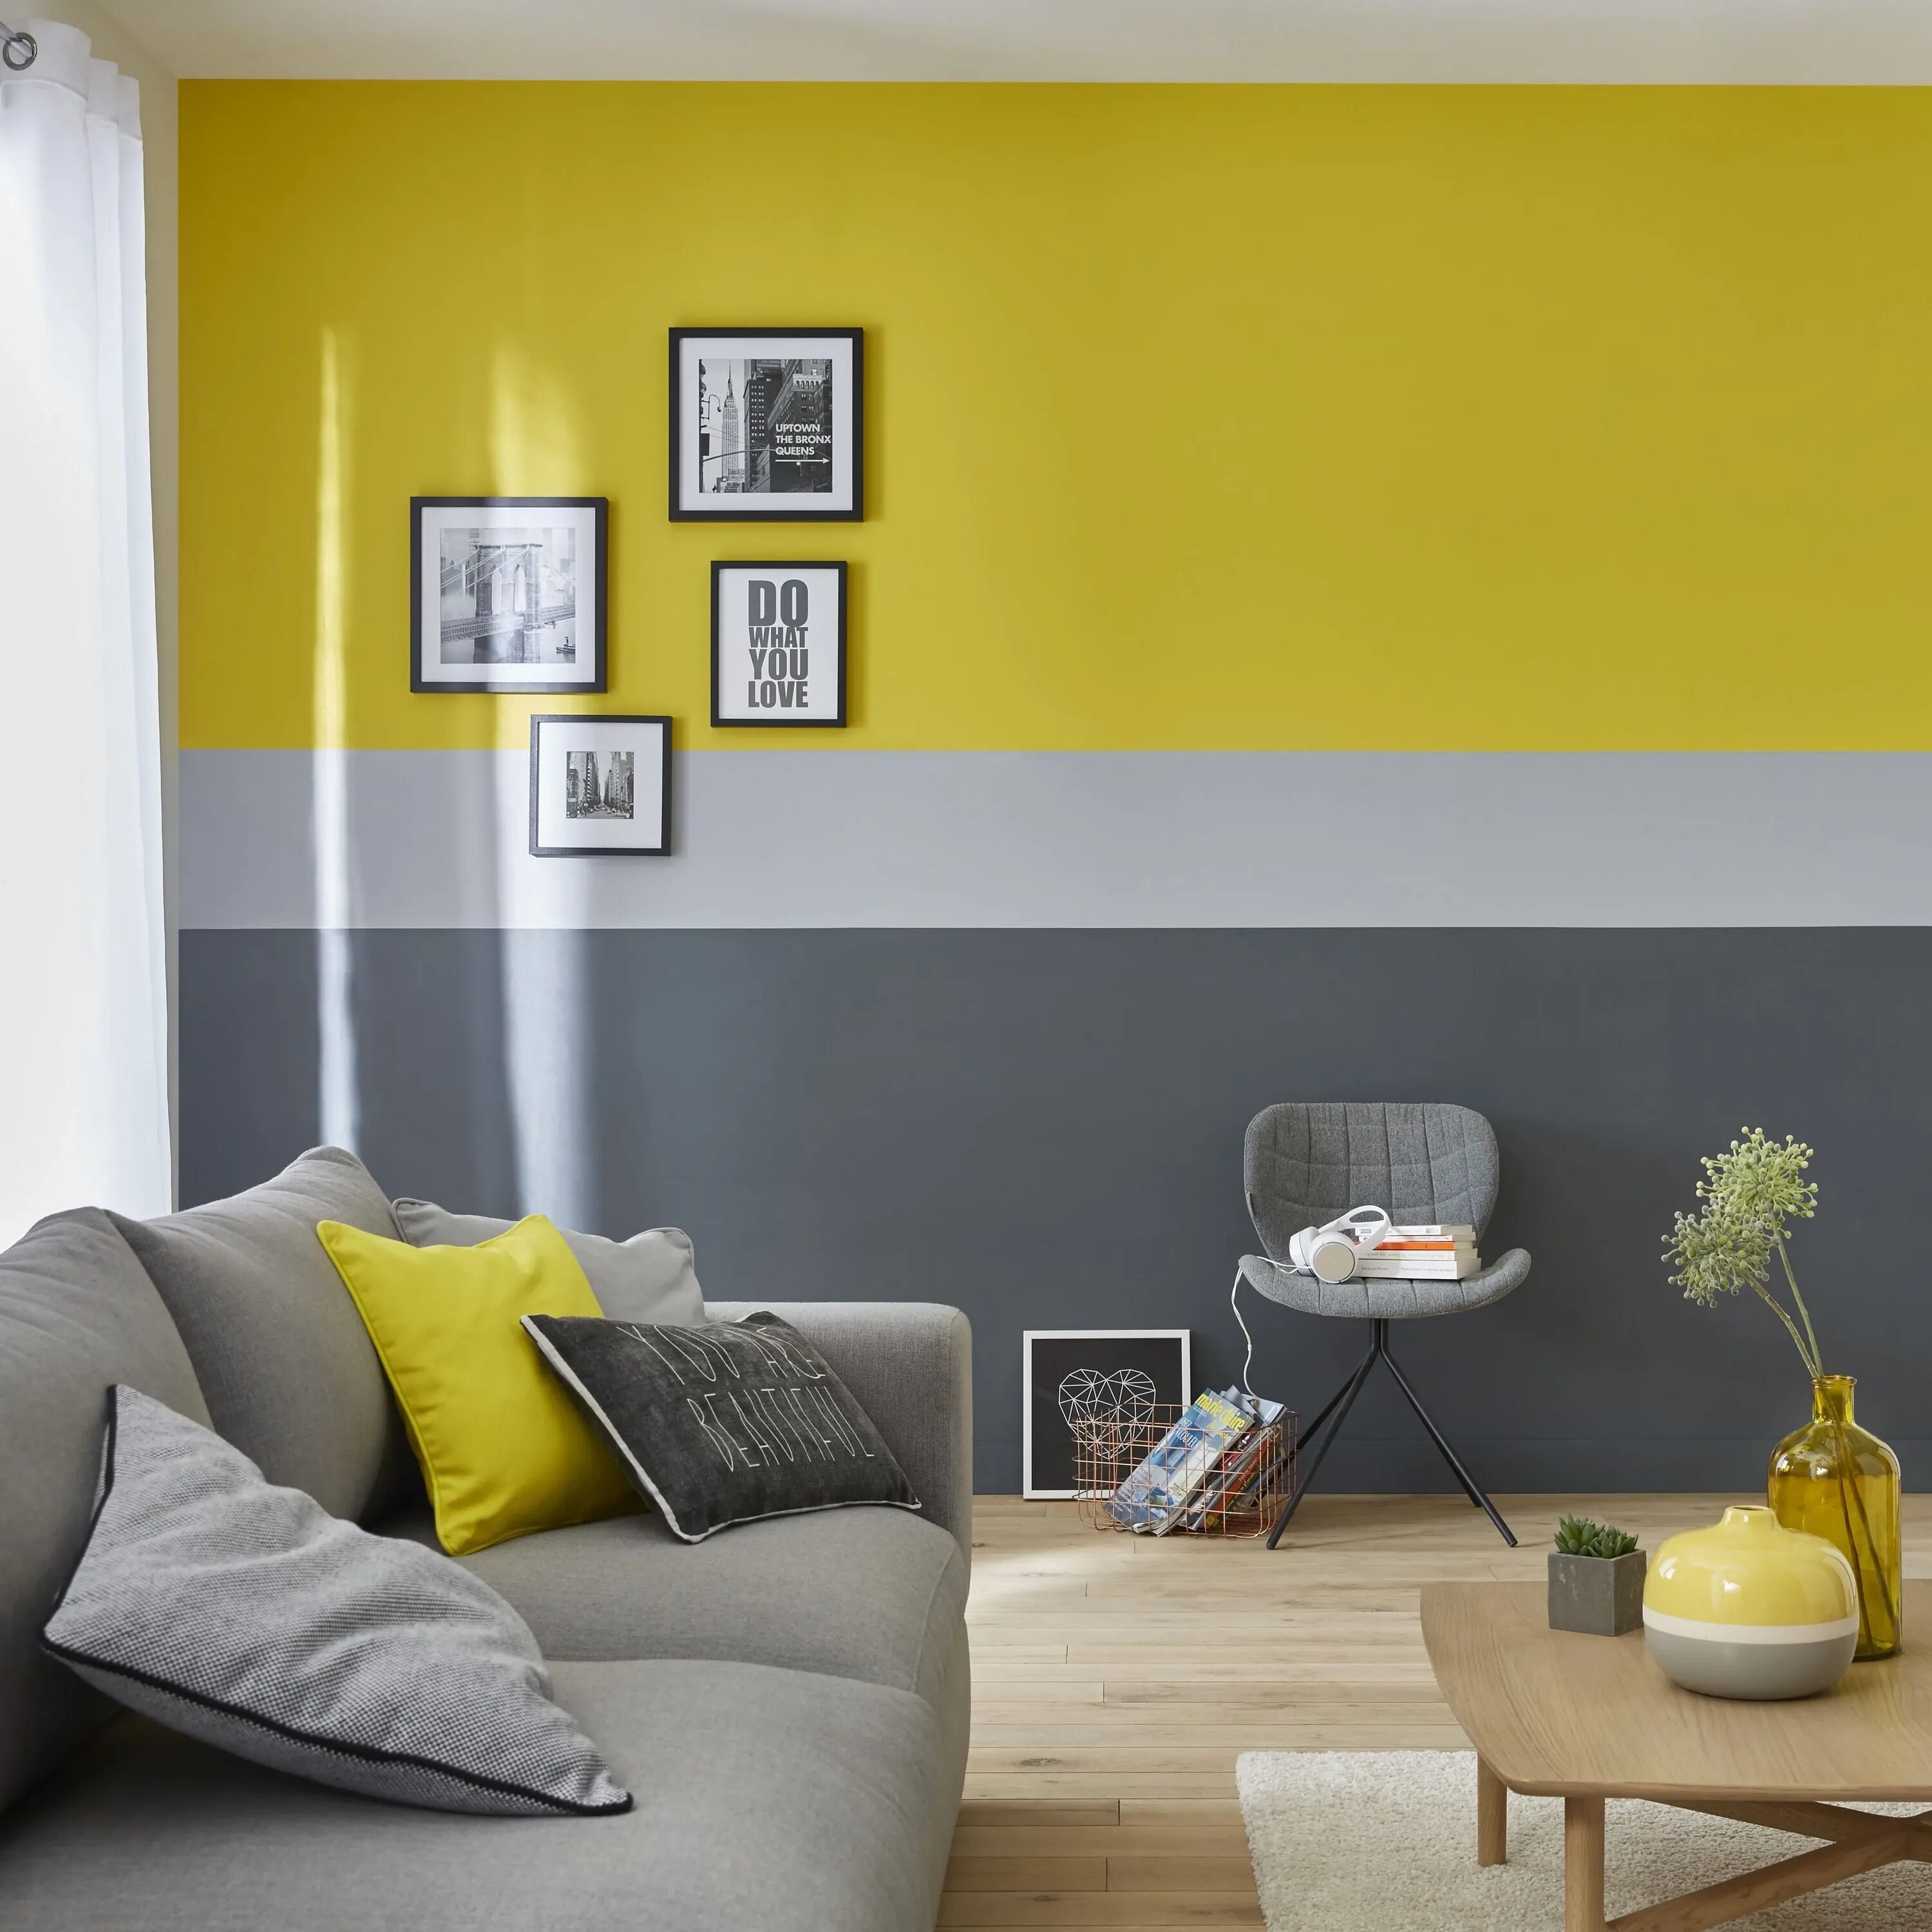 Покраска стен в интерьере. Покрашенные стены. Крашеные стены в интерьере. Желтые стены в интерьере. Модная покраска стен.